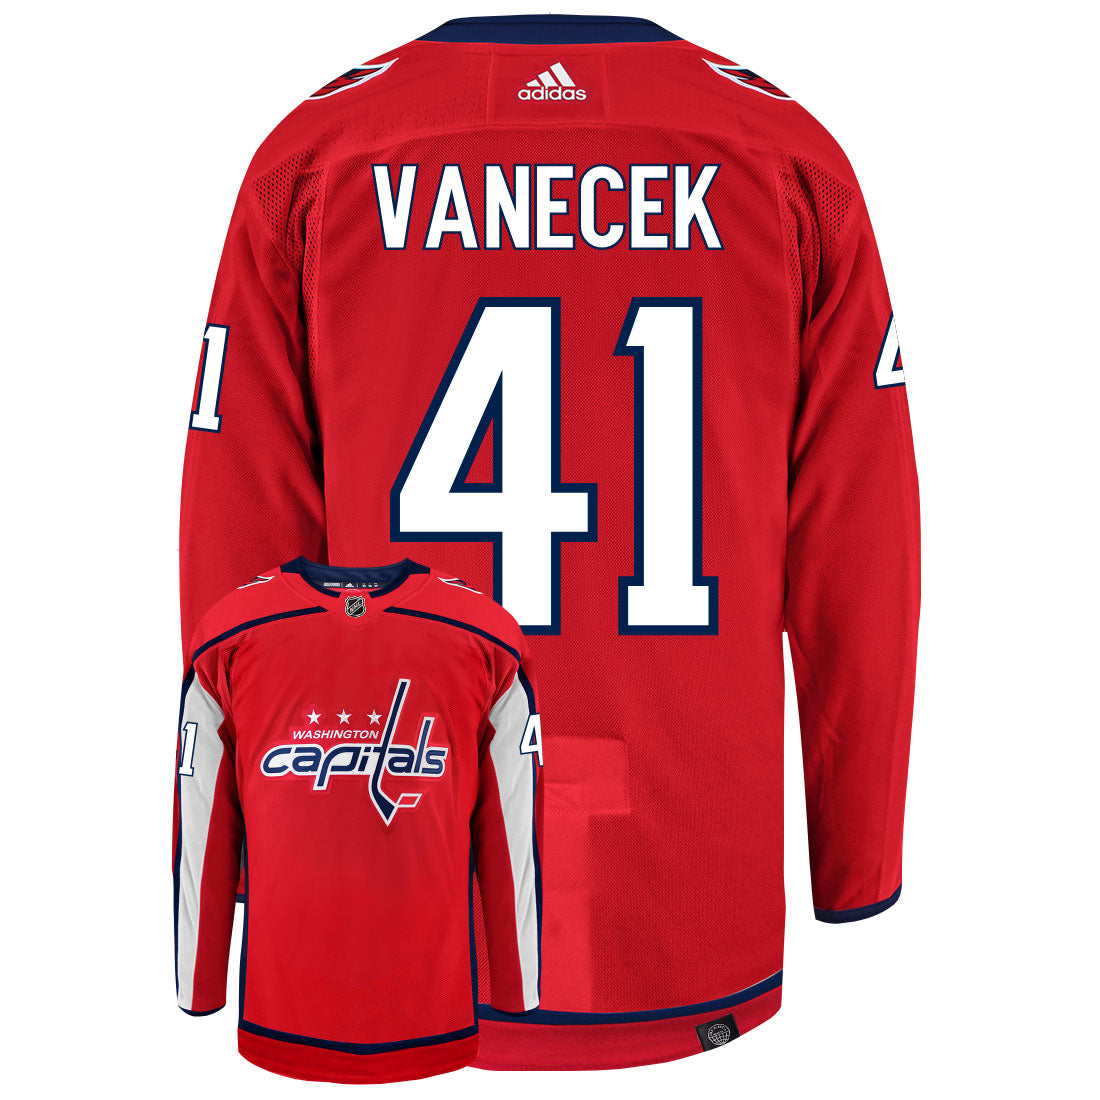 Vitek Vanecek Washington Capitals Adidas Primegreen Authentic Home NHL Hockey Jersey - Back/Front View